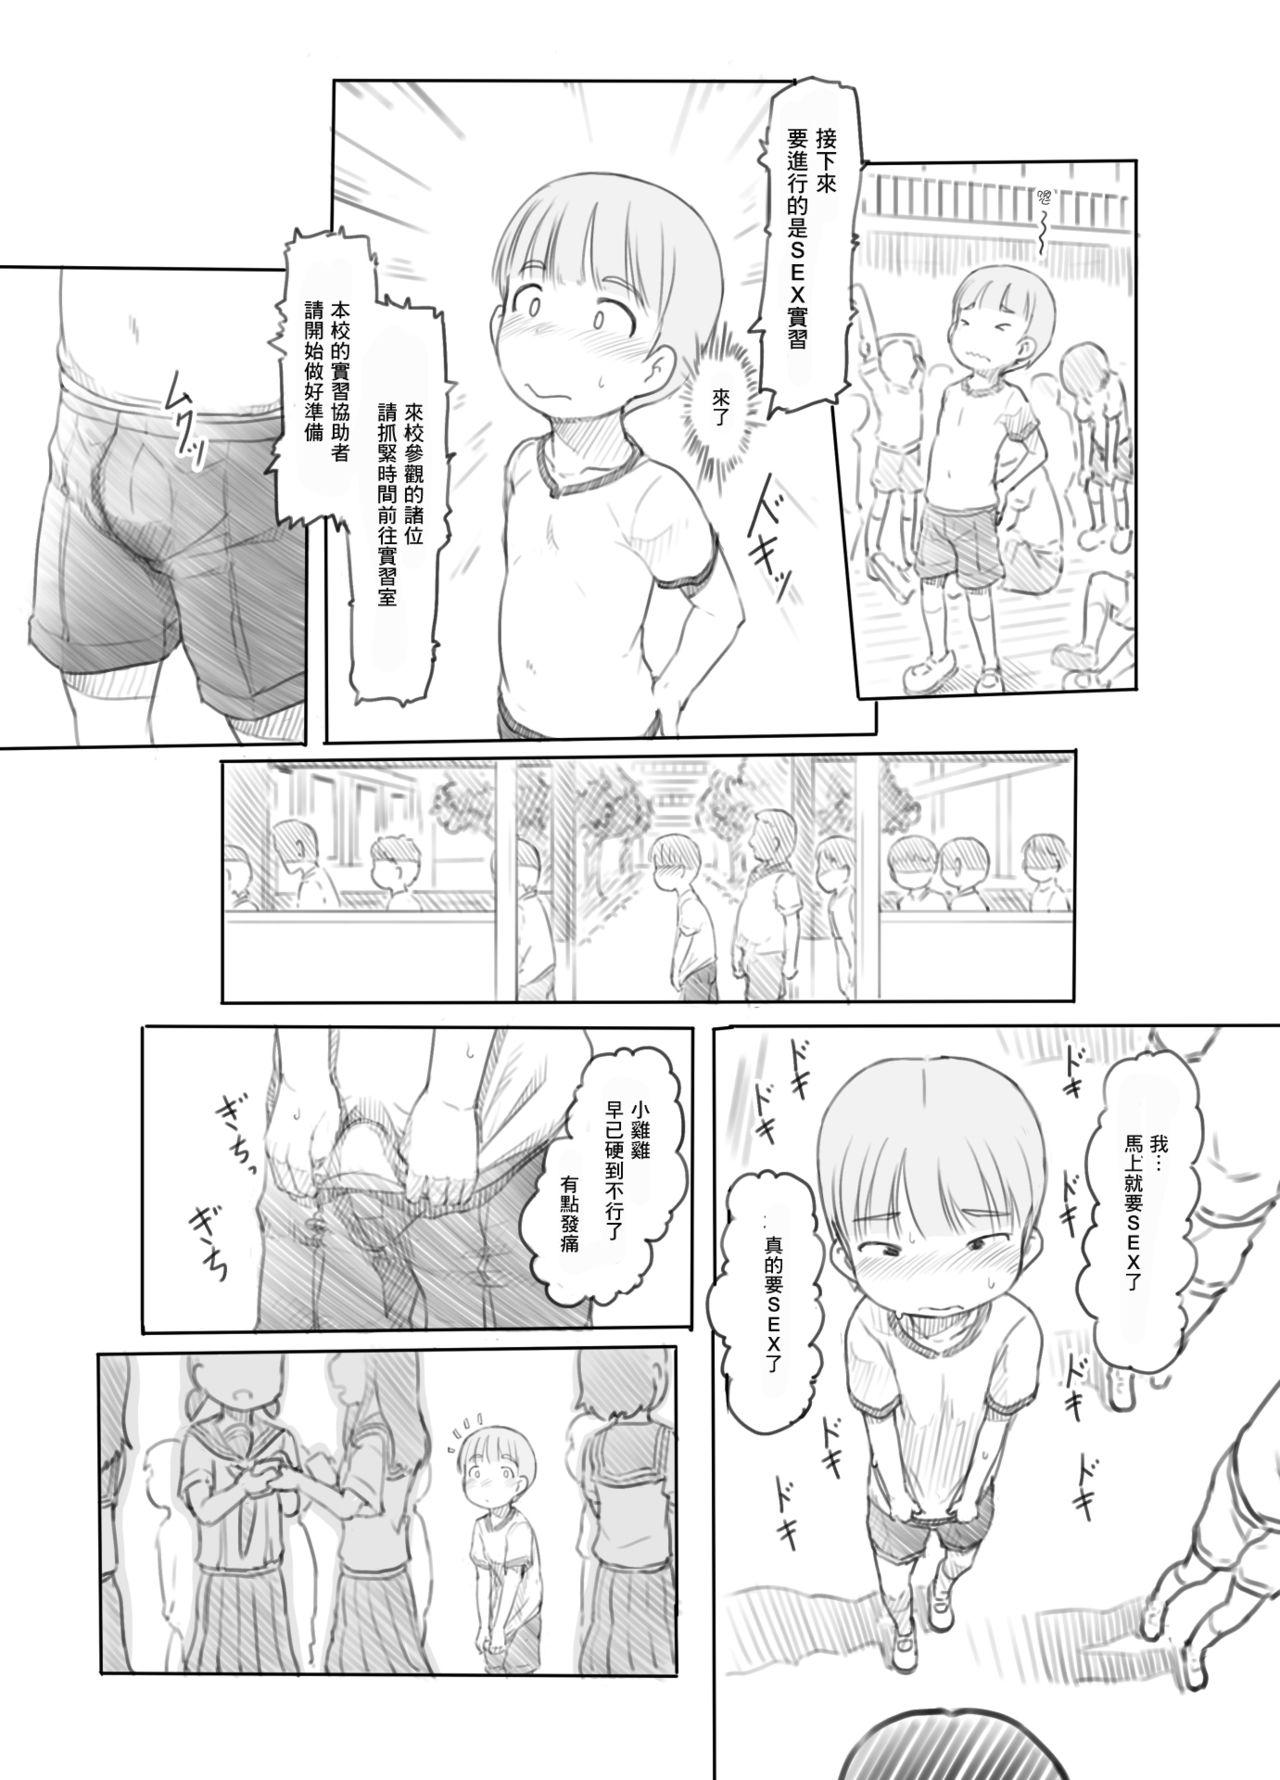 Butts OneShota Sex Jisshuu Solo Girl - Page 10